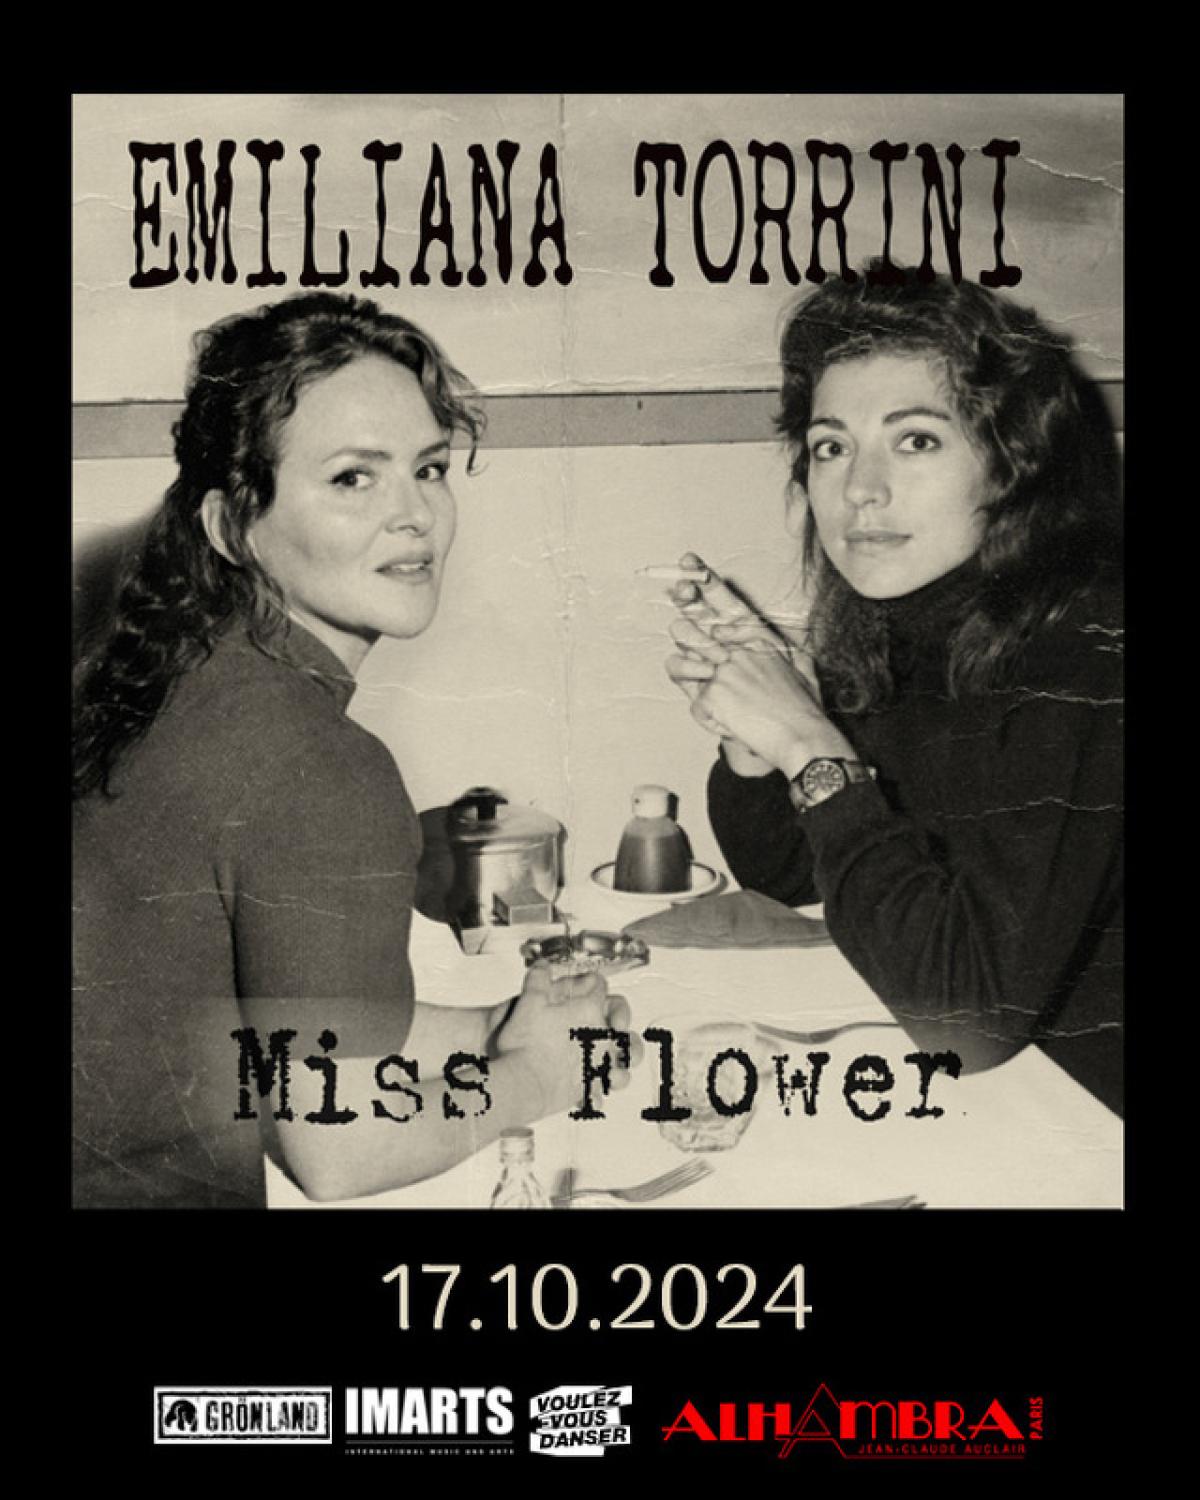 Emiliana Torrini in der Alhambra Tickets